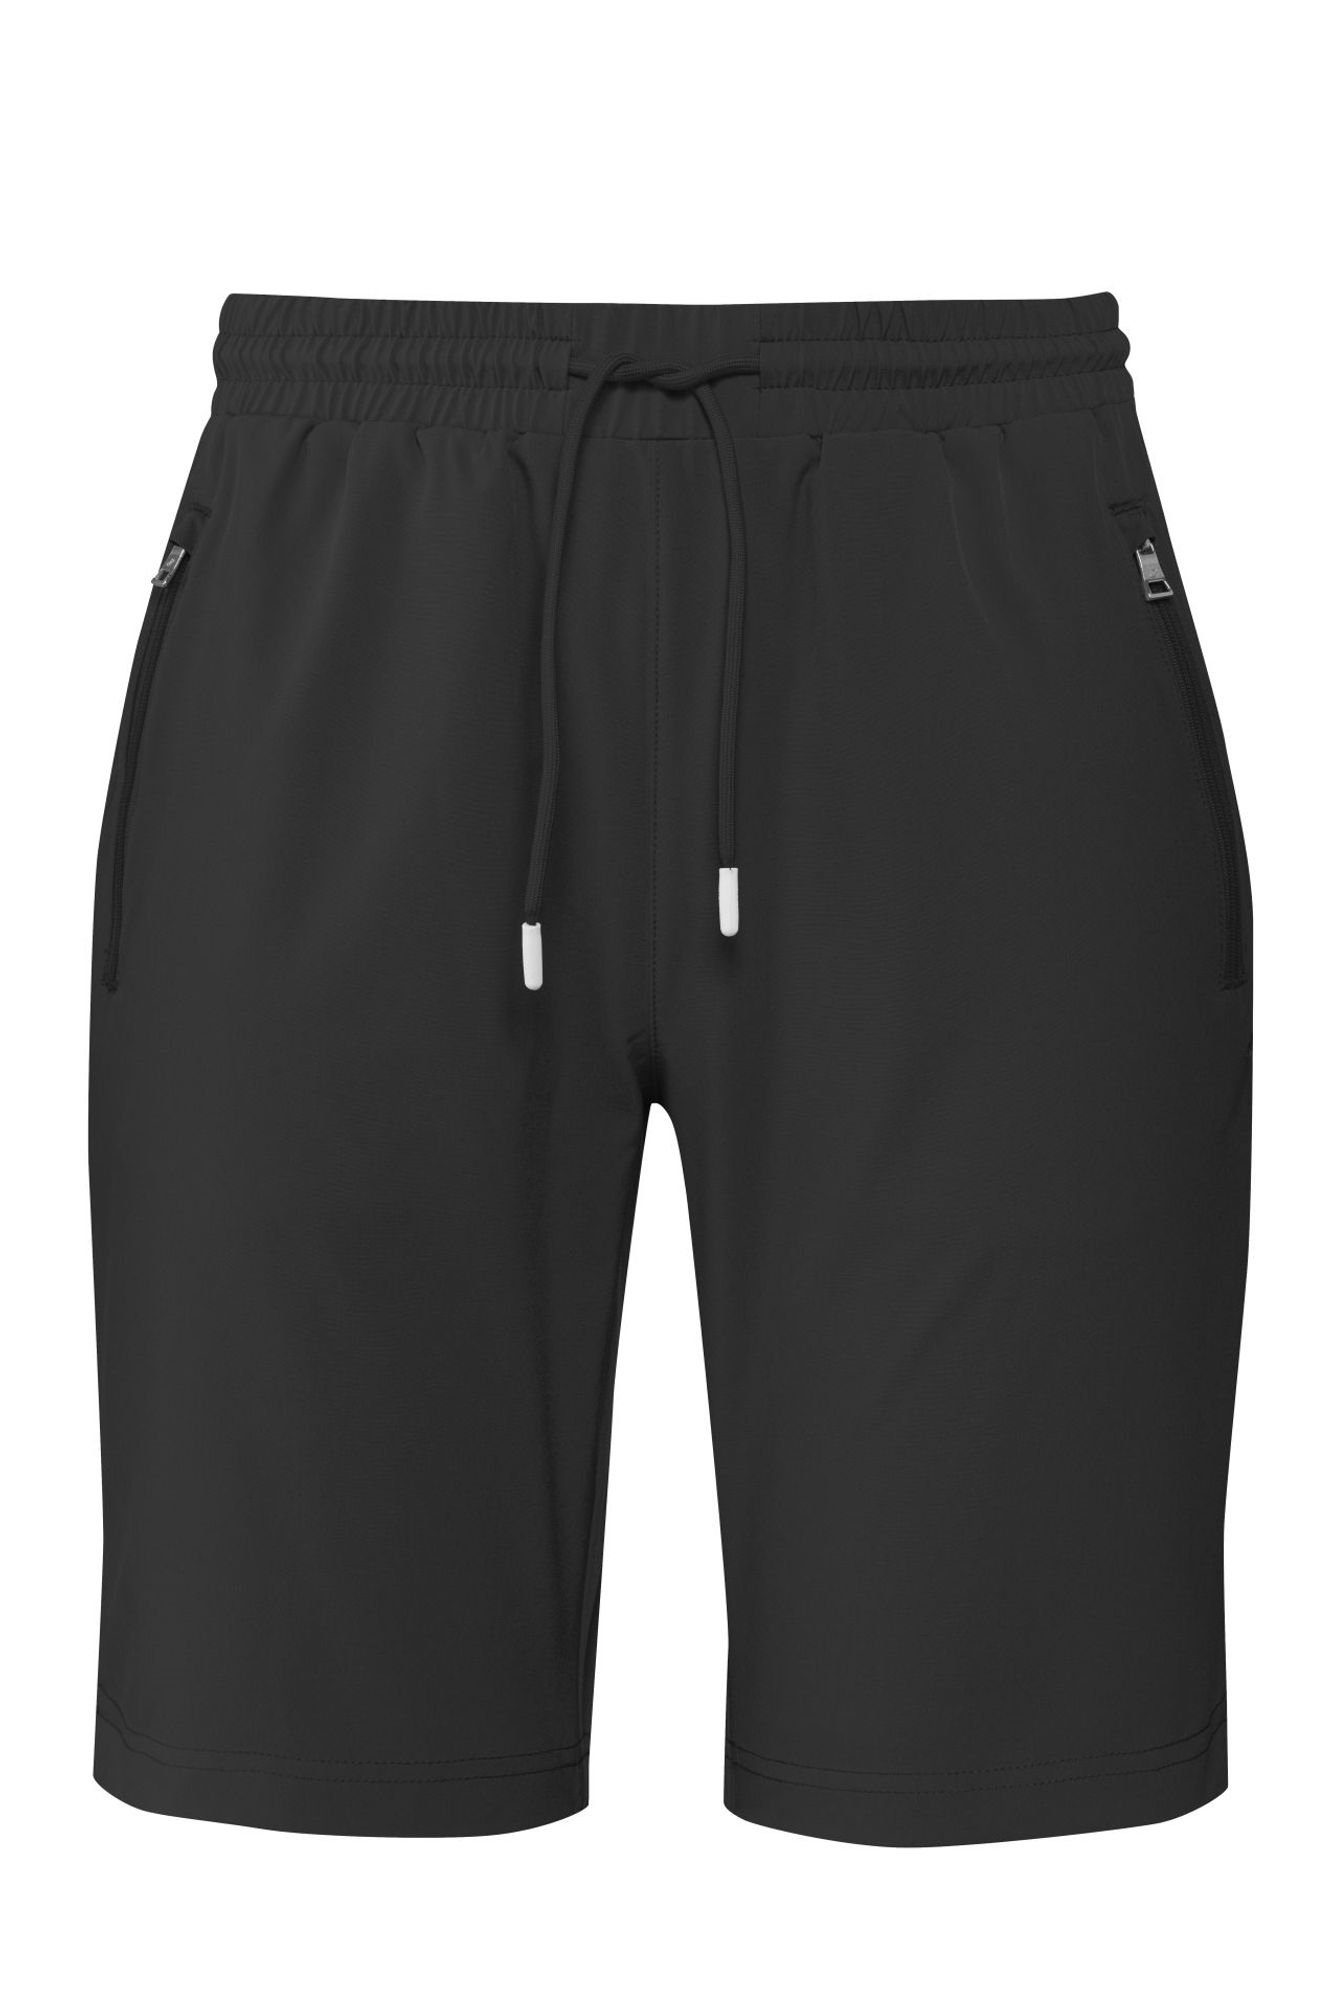 Joy Sportswear Shorts 36531 Sporthose Black (00700)